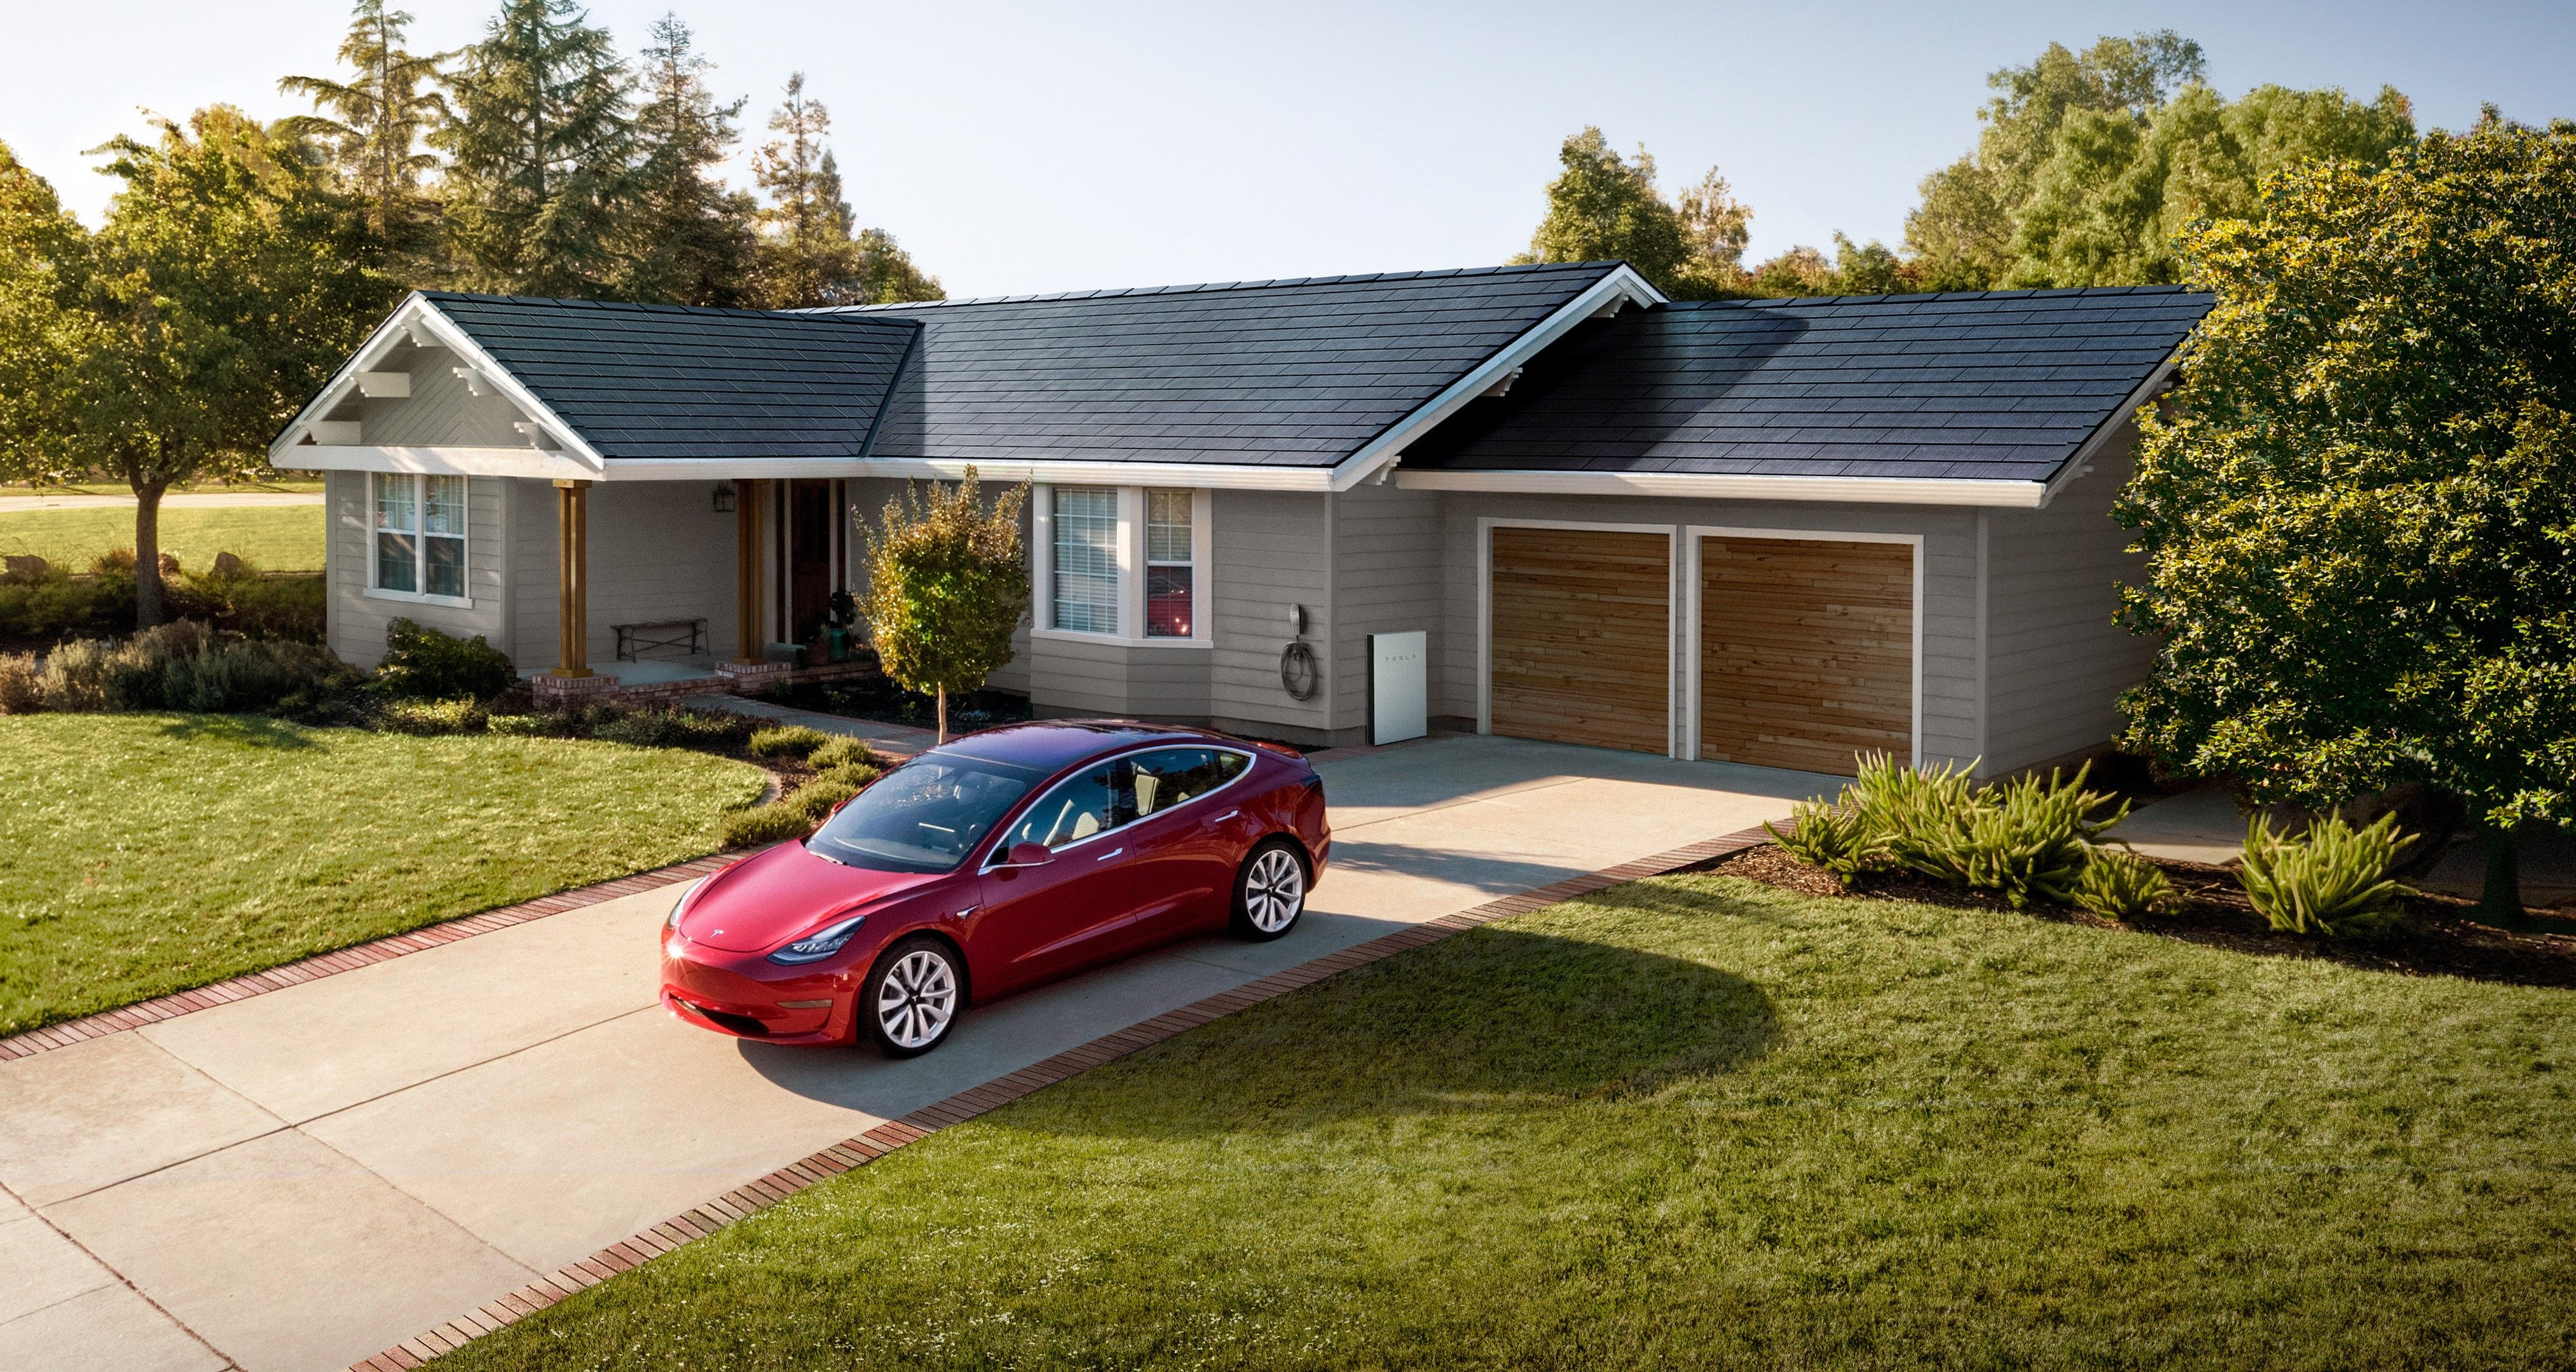 Image of Tesla solar roof